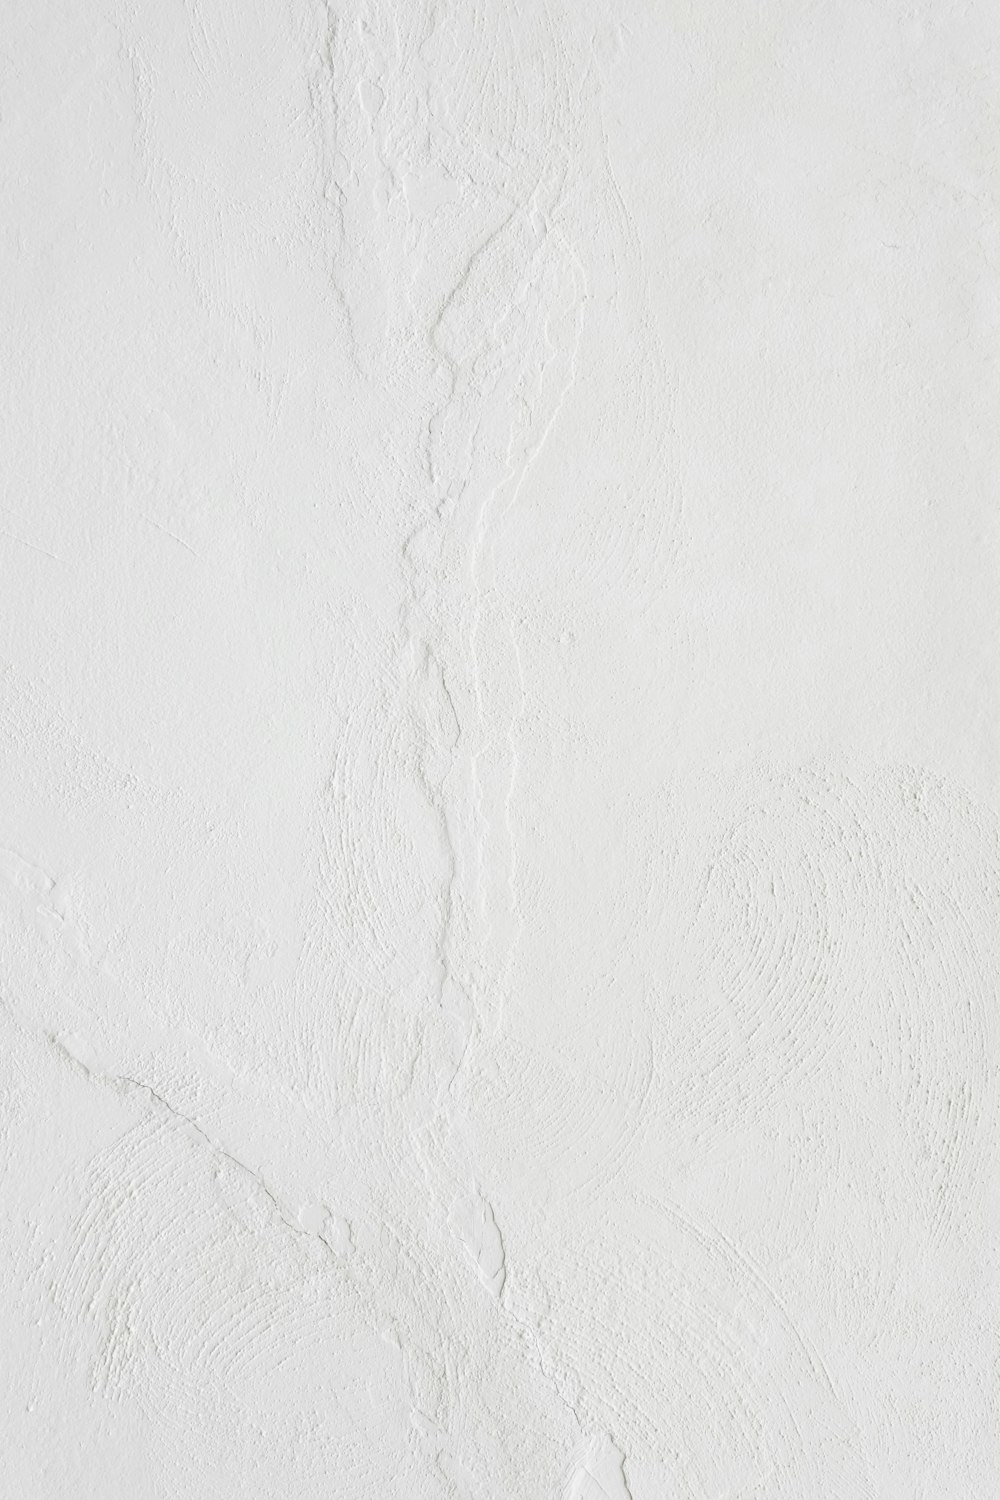 a white textured minimal background